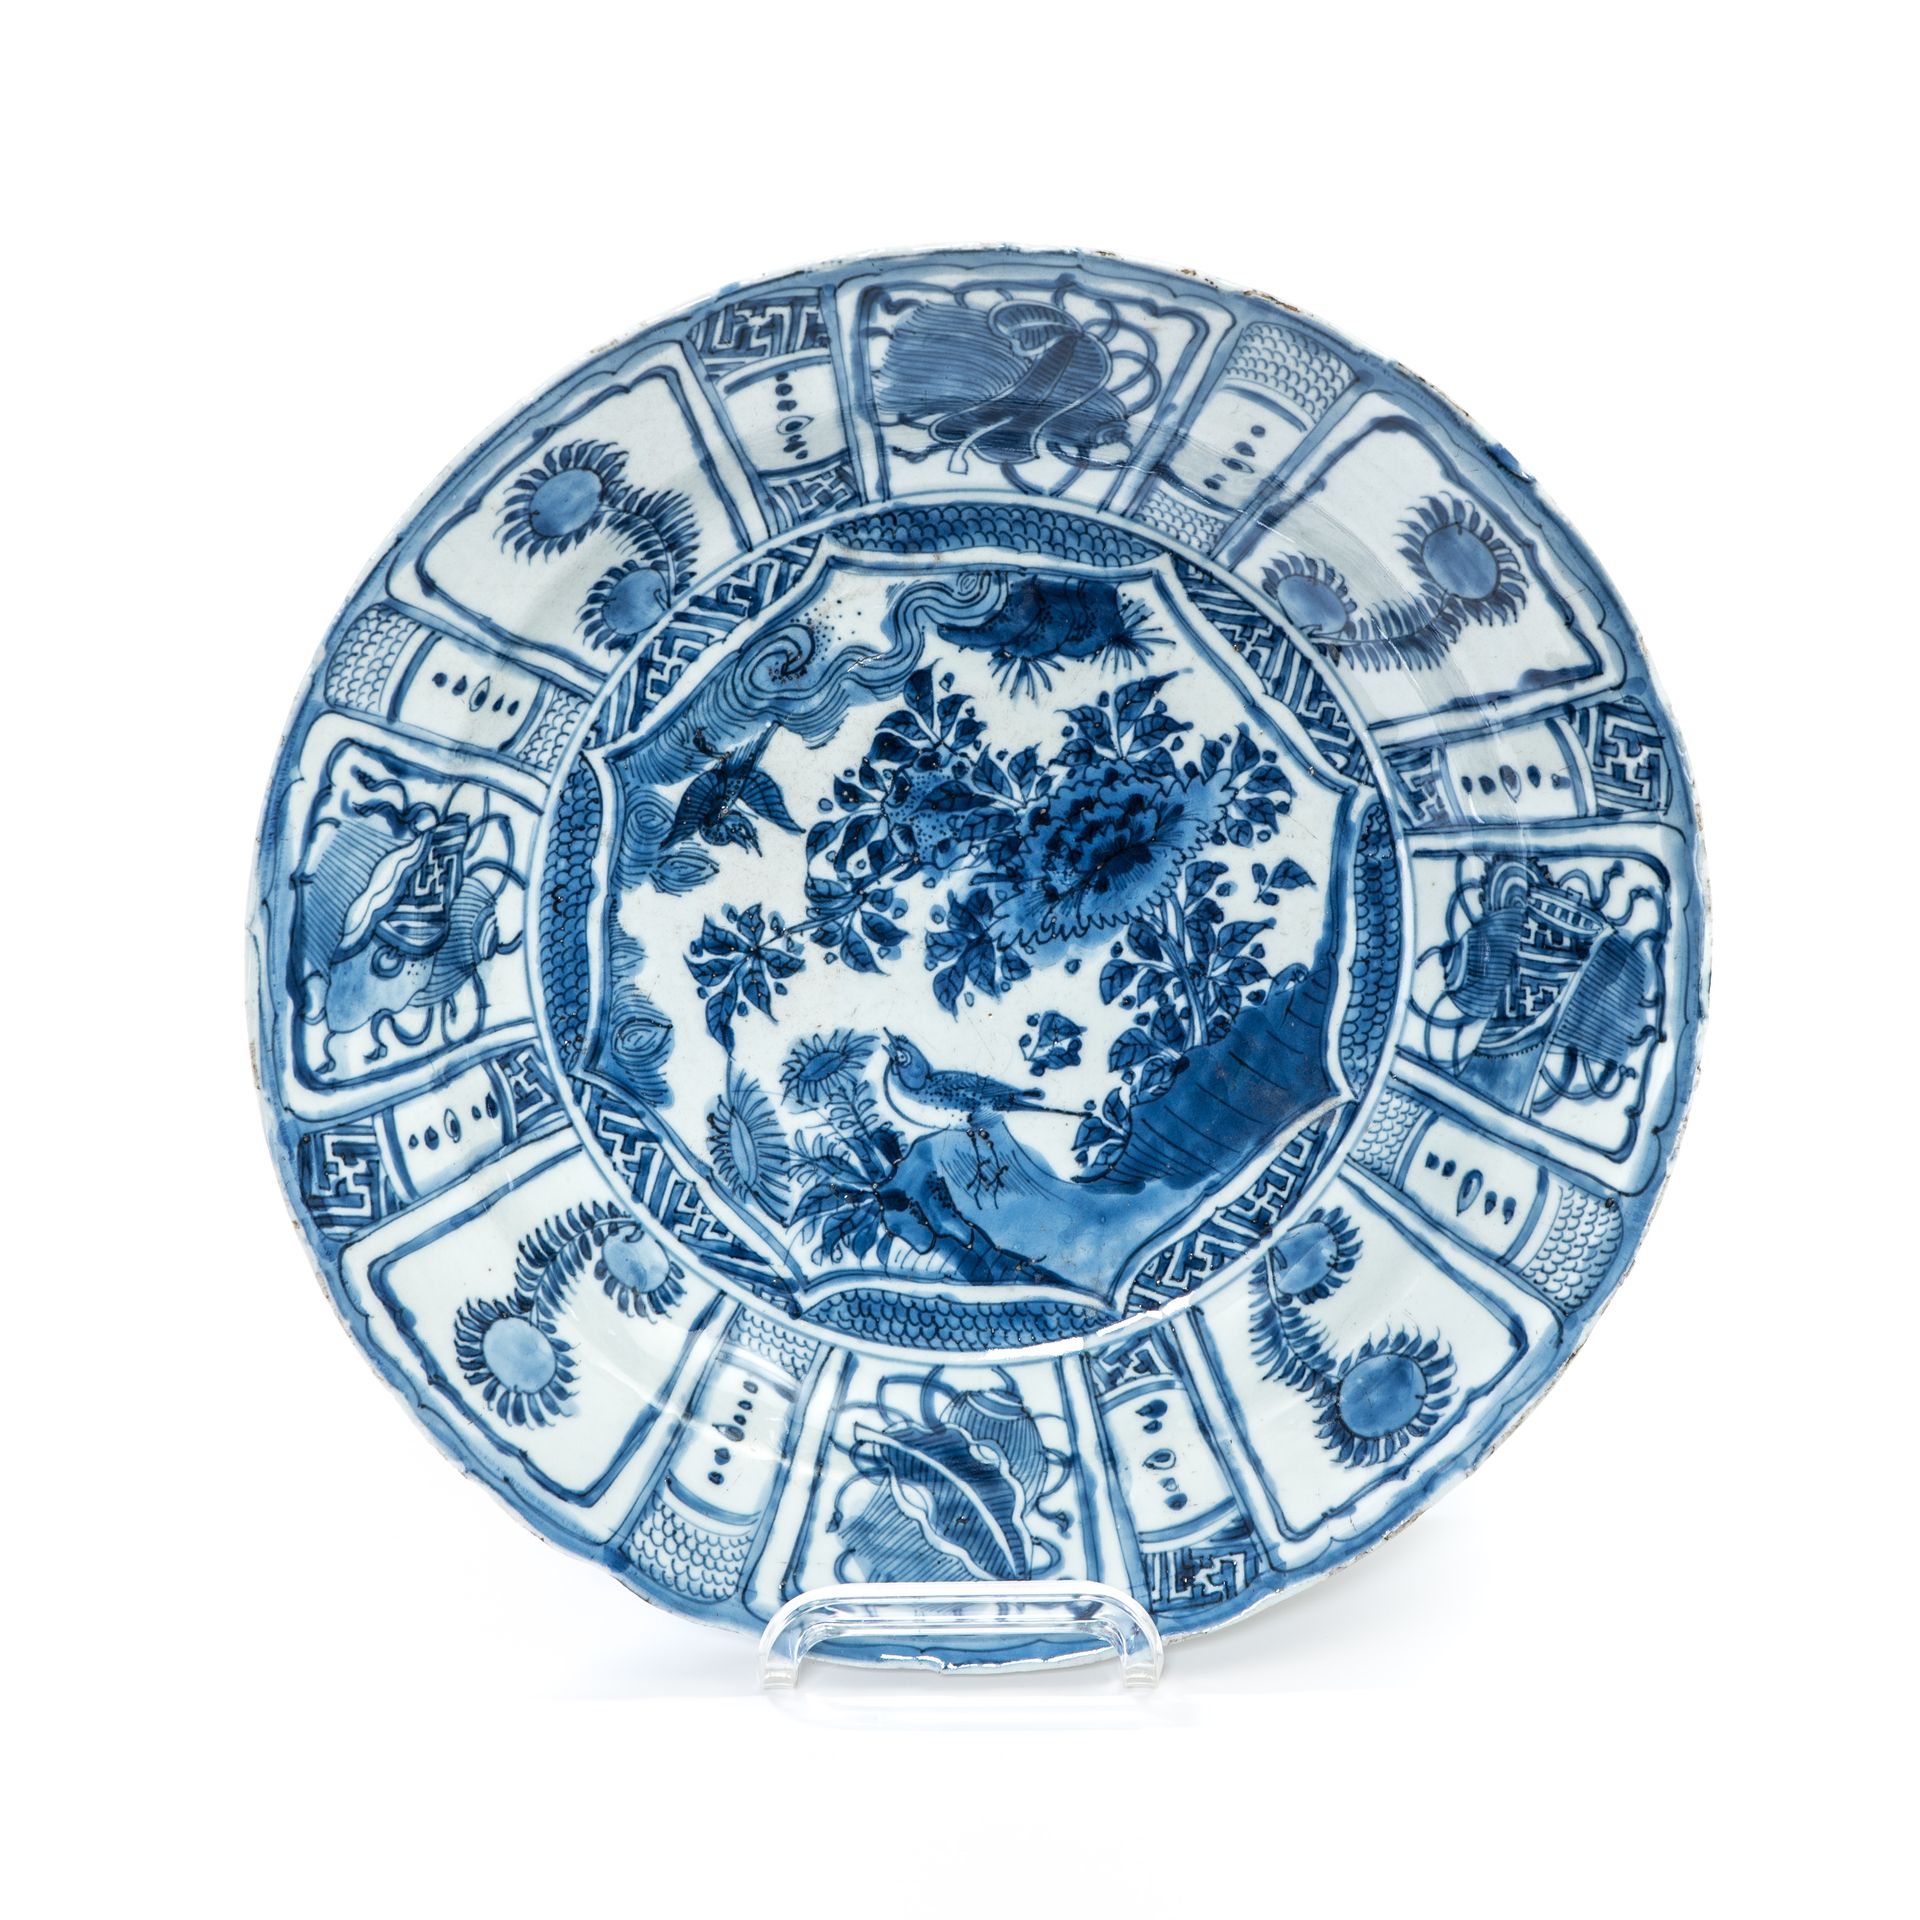 Null 中国 - 万历年间 (1573 - 1620)

空心菜



瓷盘中央用蓝色釉下彩装饰着一只盛开着牡丹的岩石上的鸟，翅膀上装饰着吉祥物和交替的向日葵&hellip;